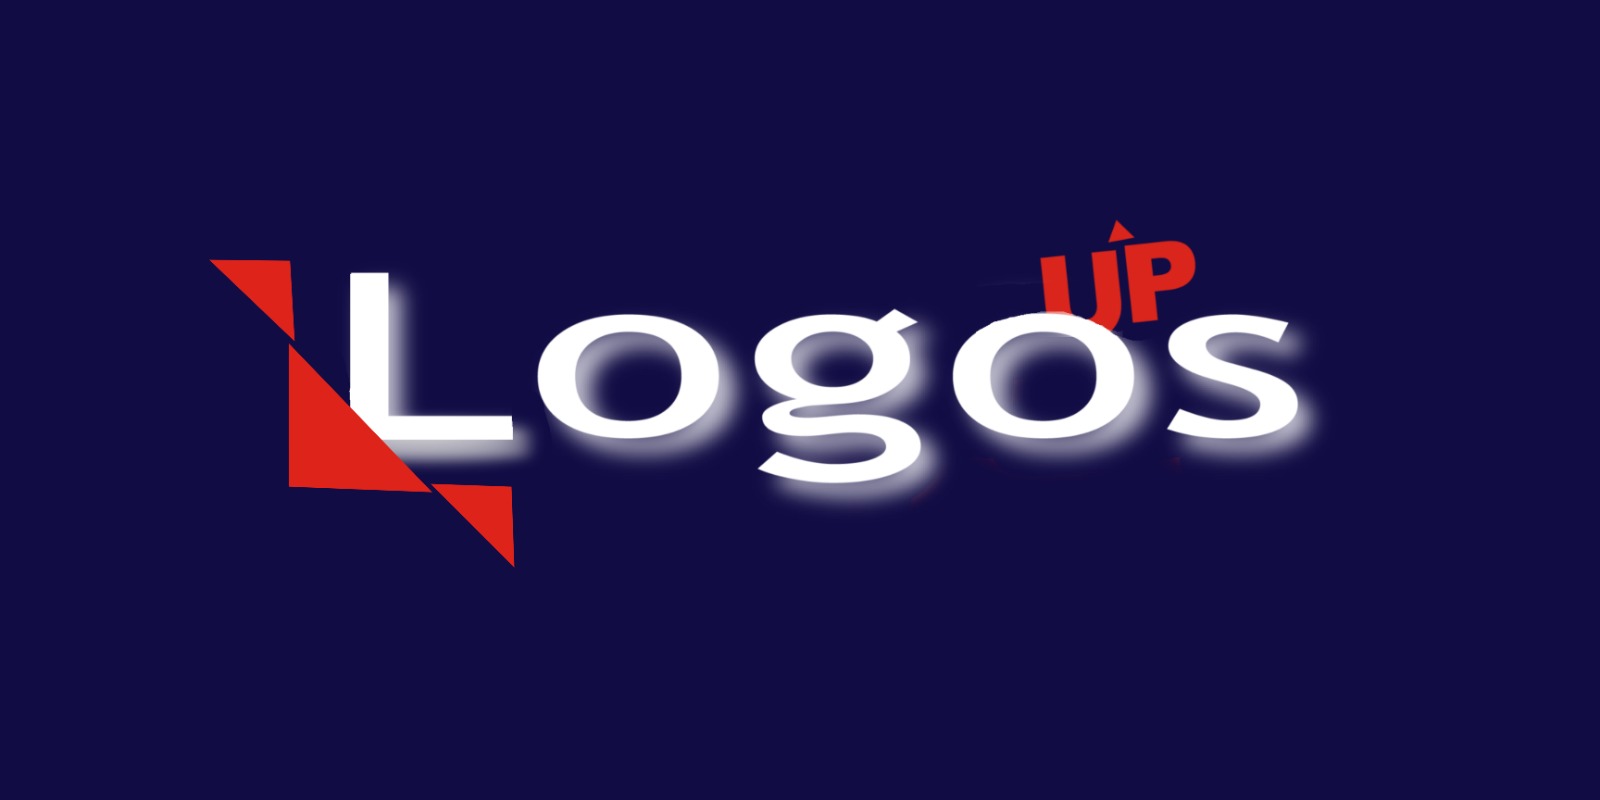 Up Logos